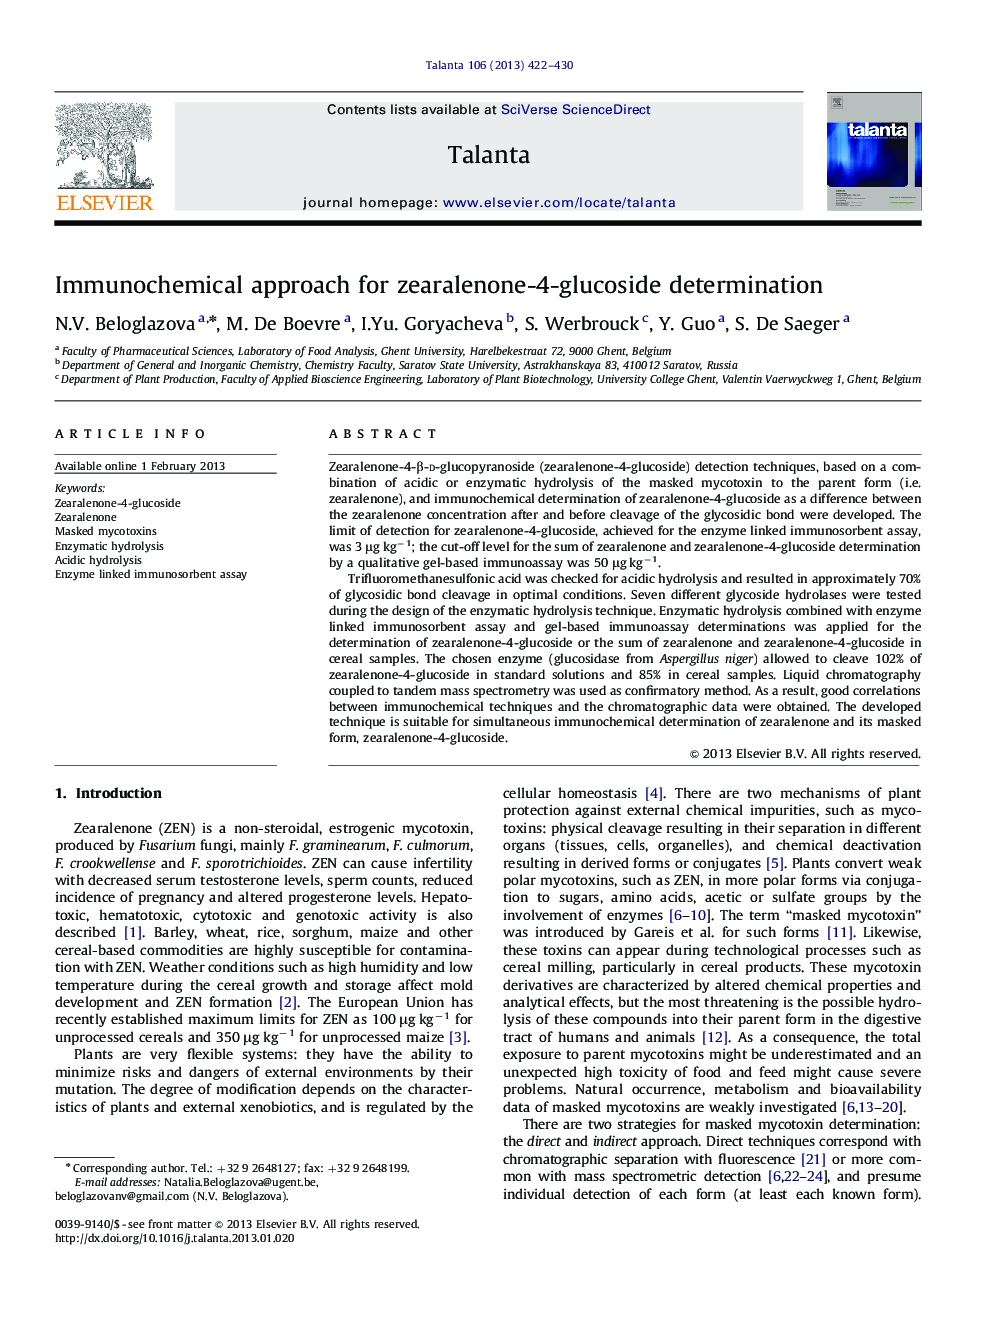 Immunochemical approach for zearalenone-4-glucoside determination